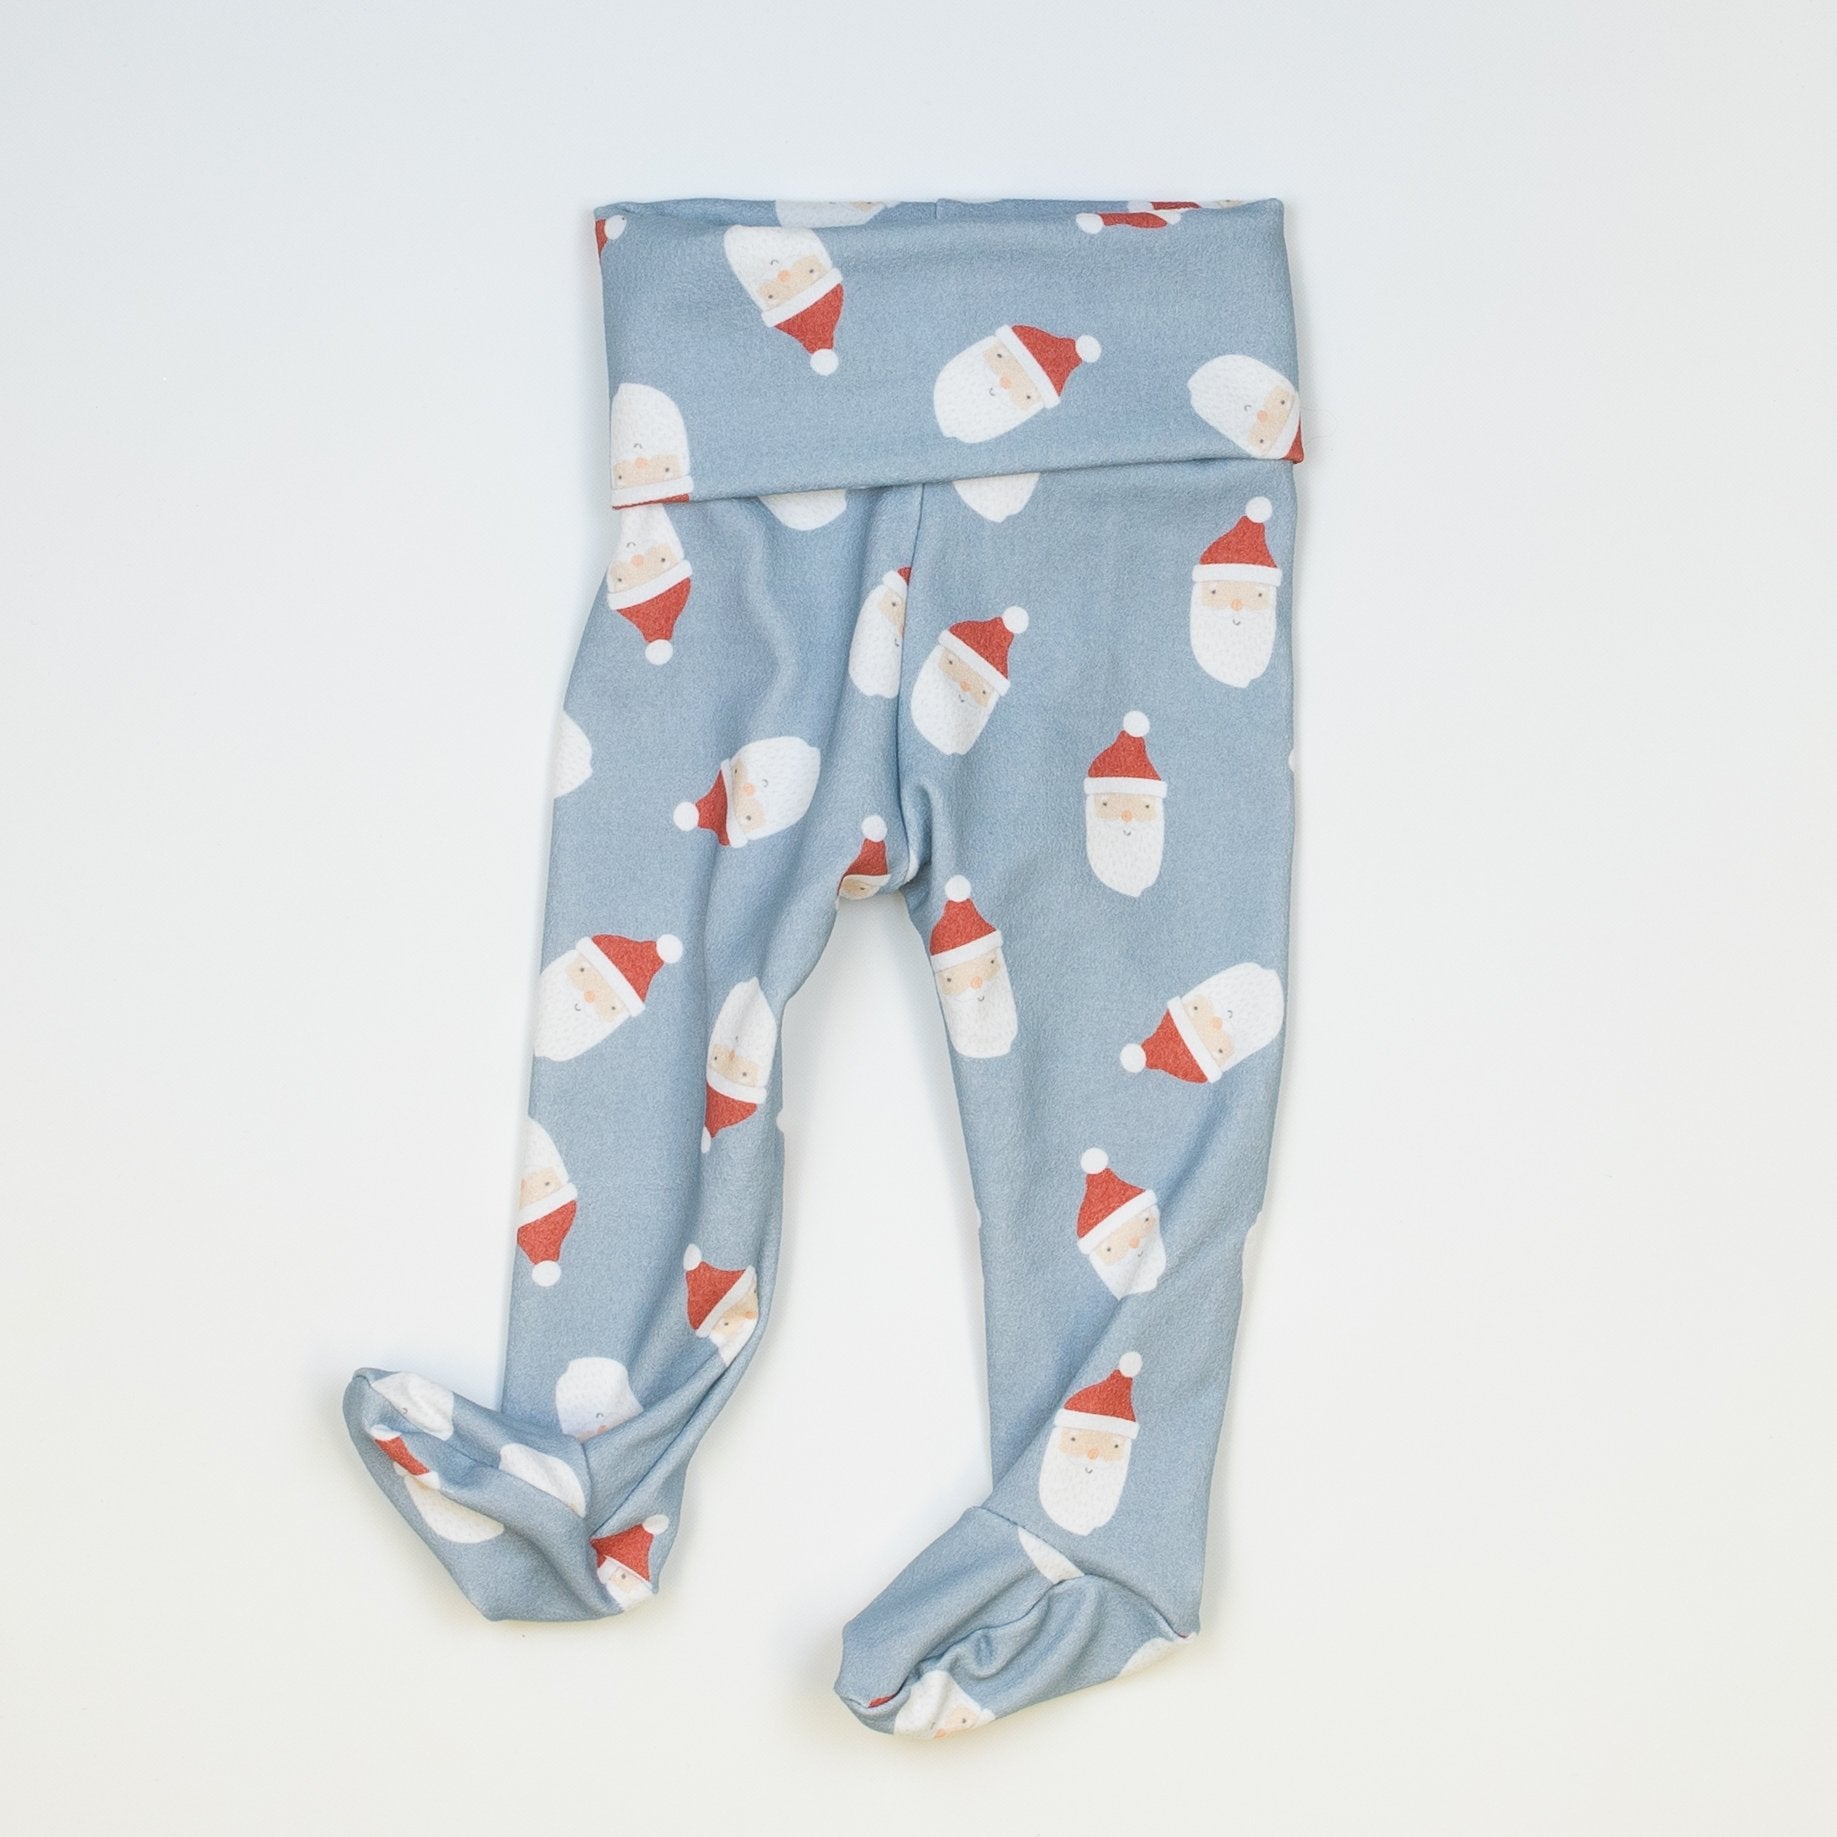 Buy Kidbee Baby Unisex Socks with Pant/Booties Pant/Footies Leggings(Set of  4) (0-3 Months, FX-BTP-Multi-4pc) at Amazon.in